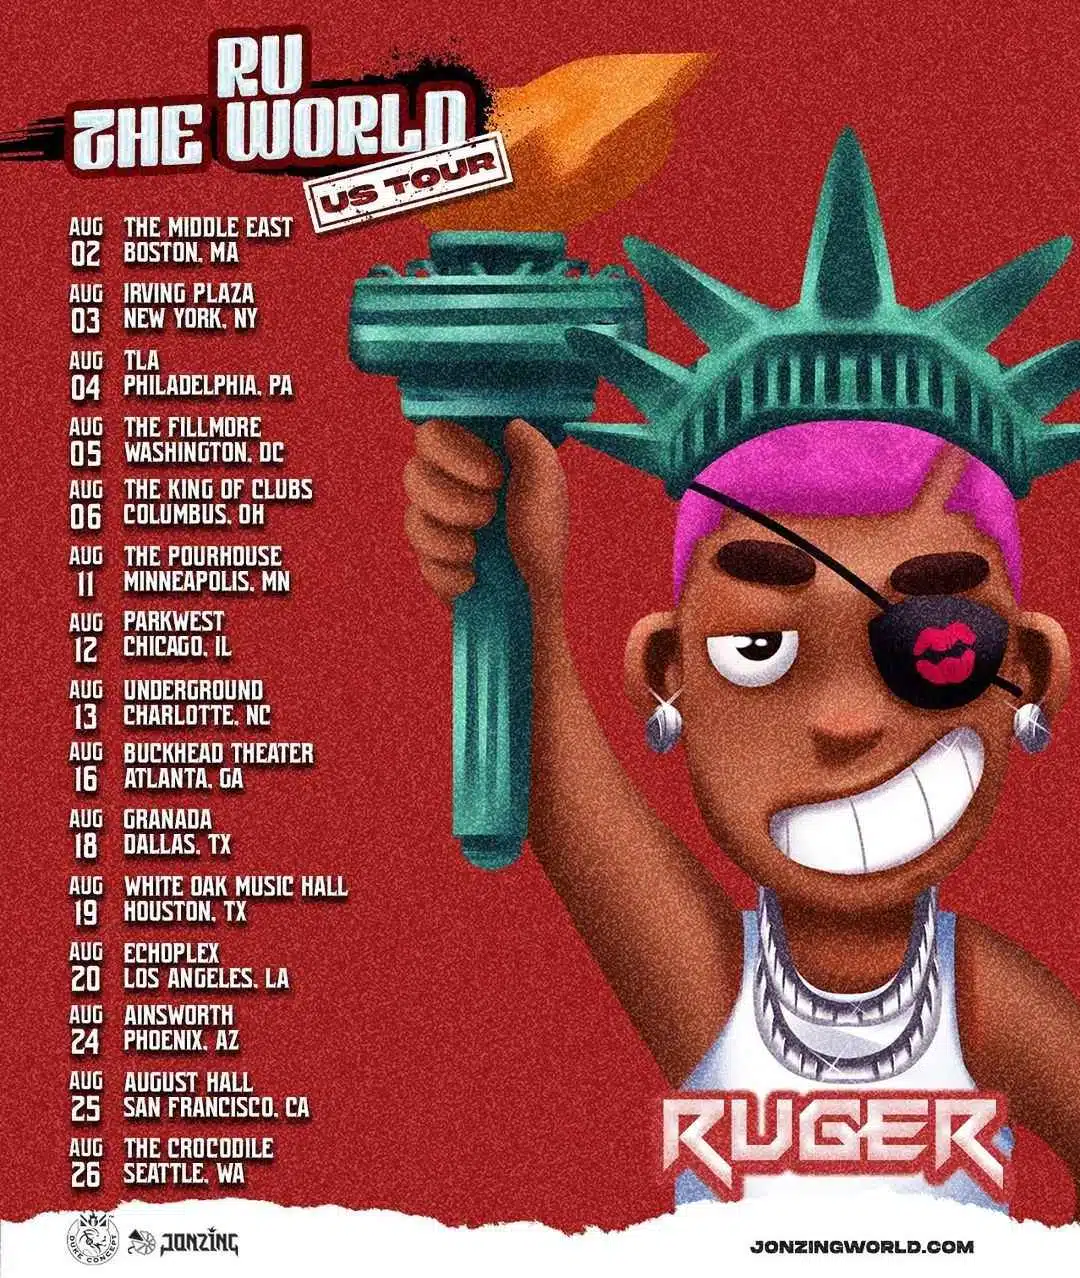 Ruger Hello America Announces “RU THE WORLD” Headline Tour Across the US